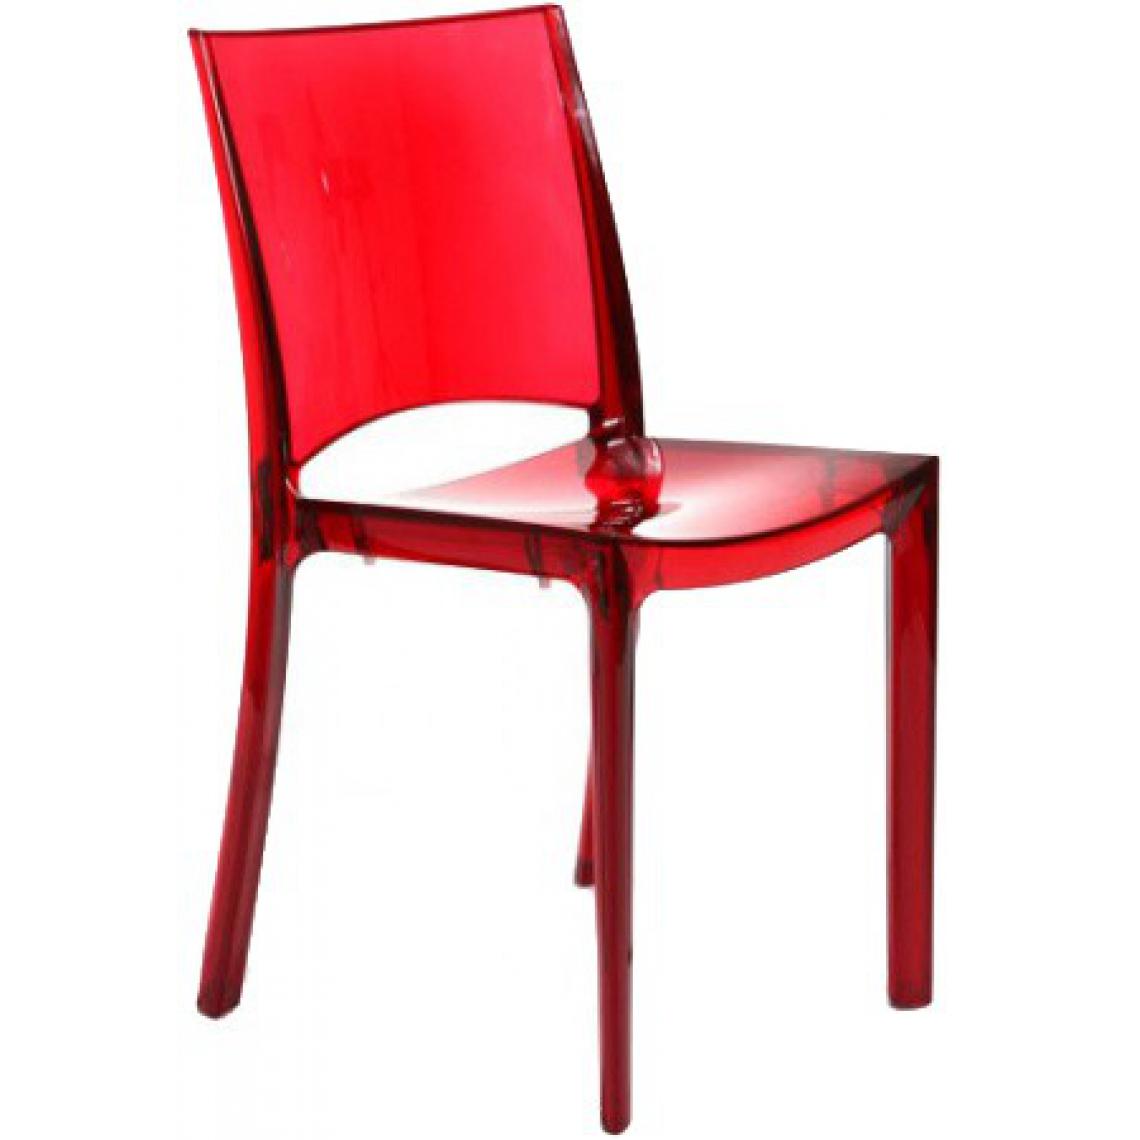 3S. x Home - Chaise Design Rouge Transparent NILO - Chaises